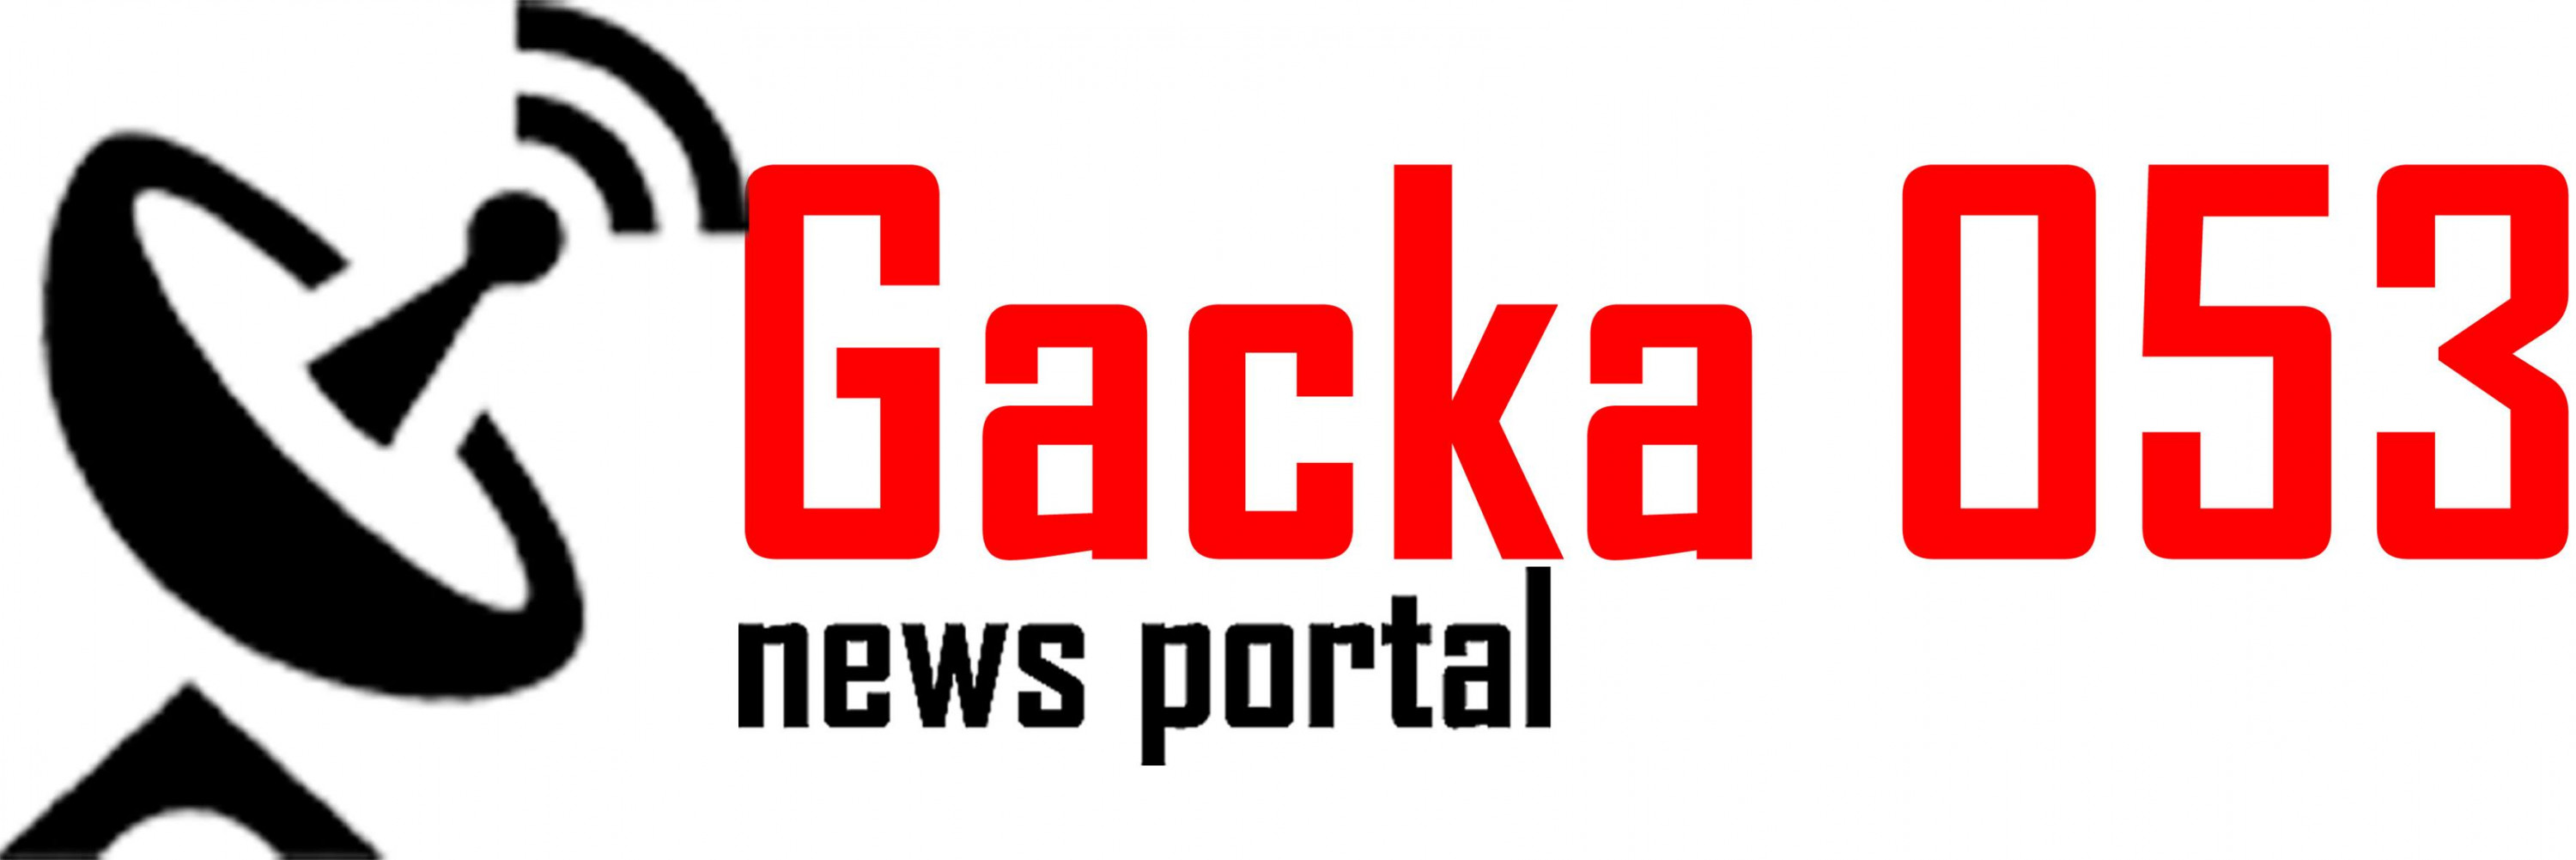 logo_GAcka053.jpg